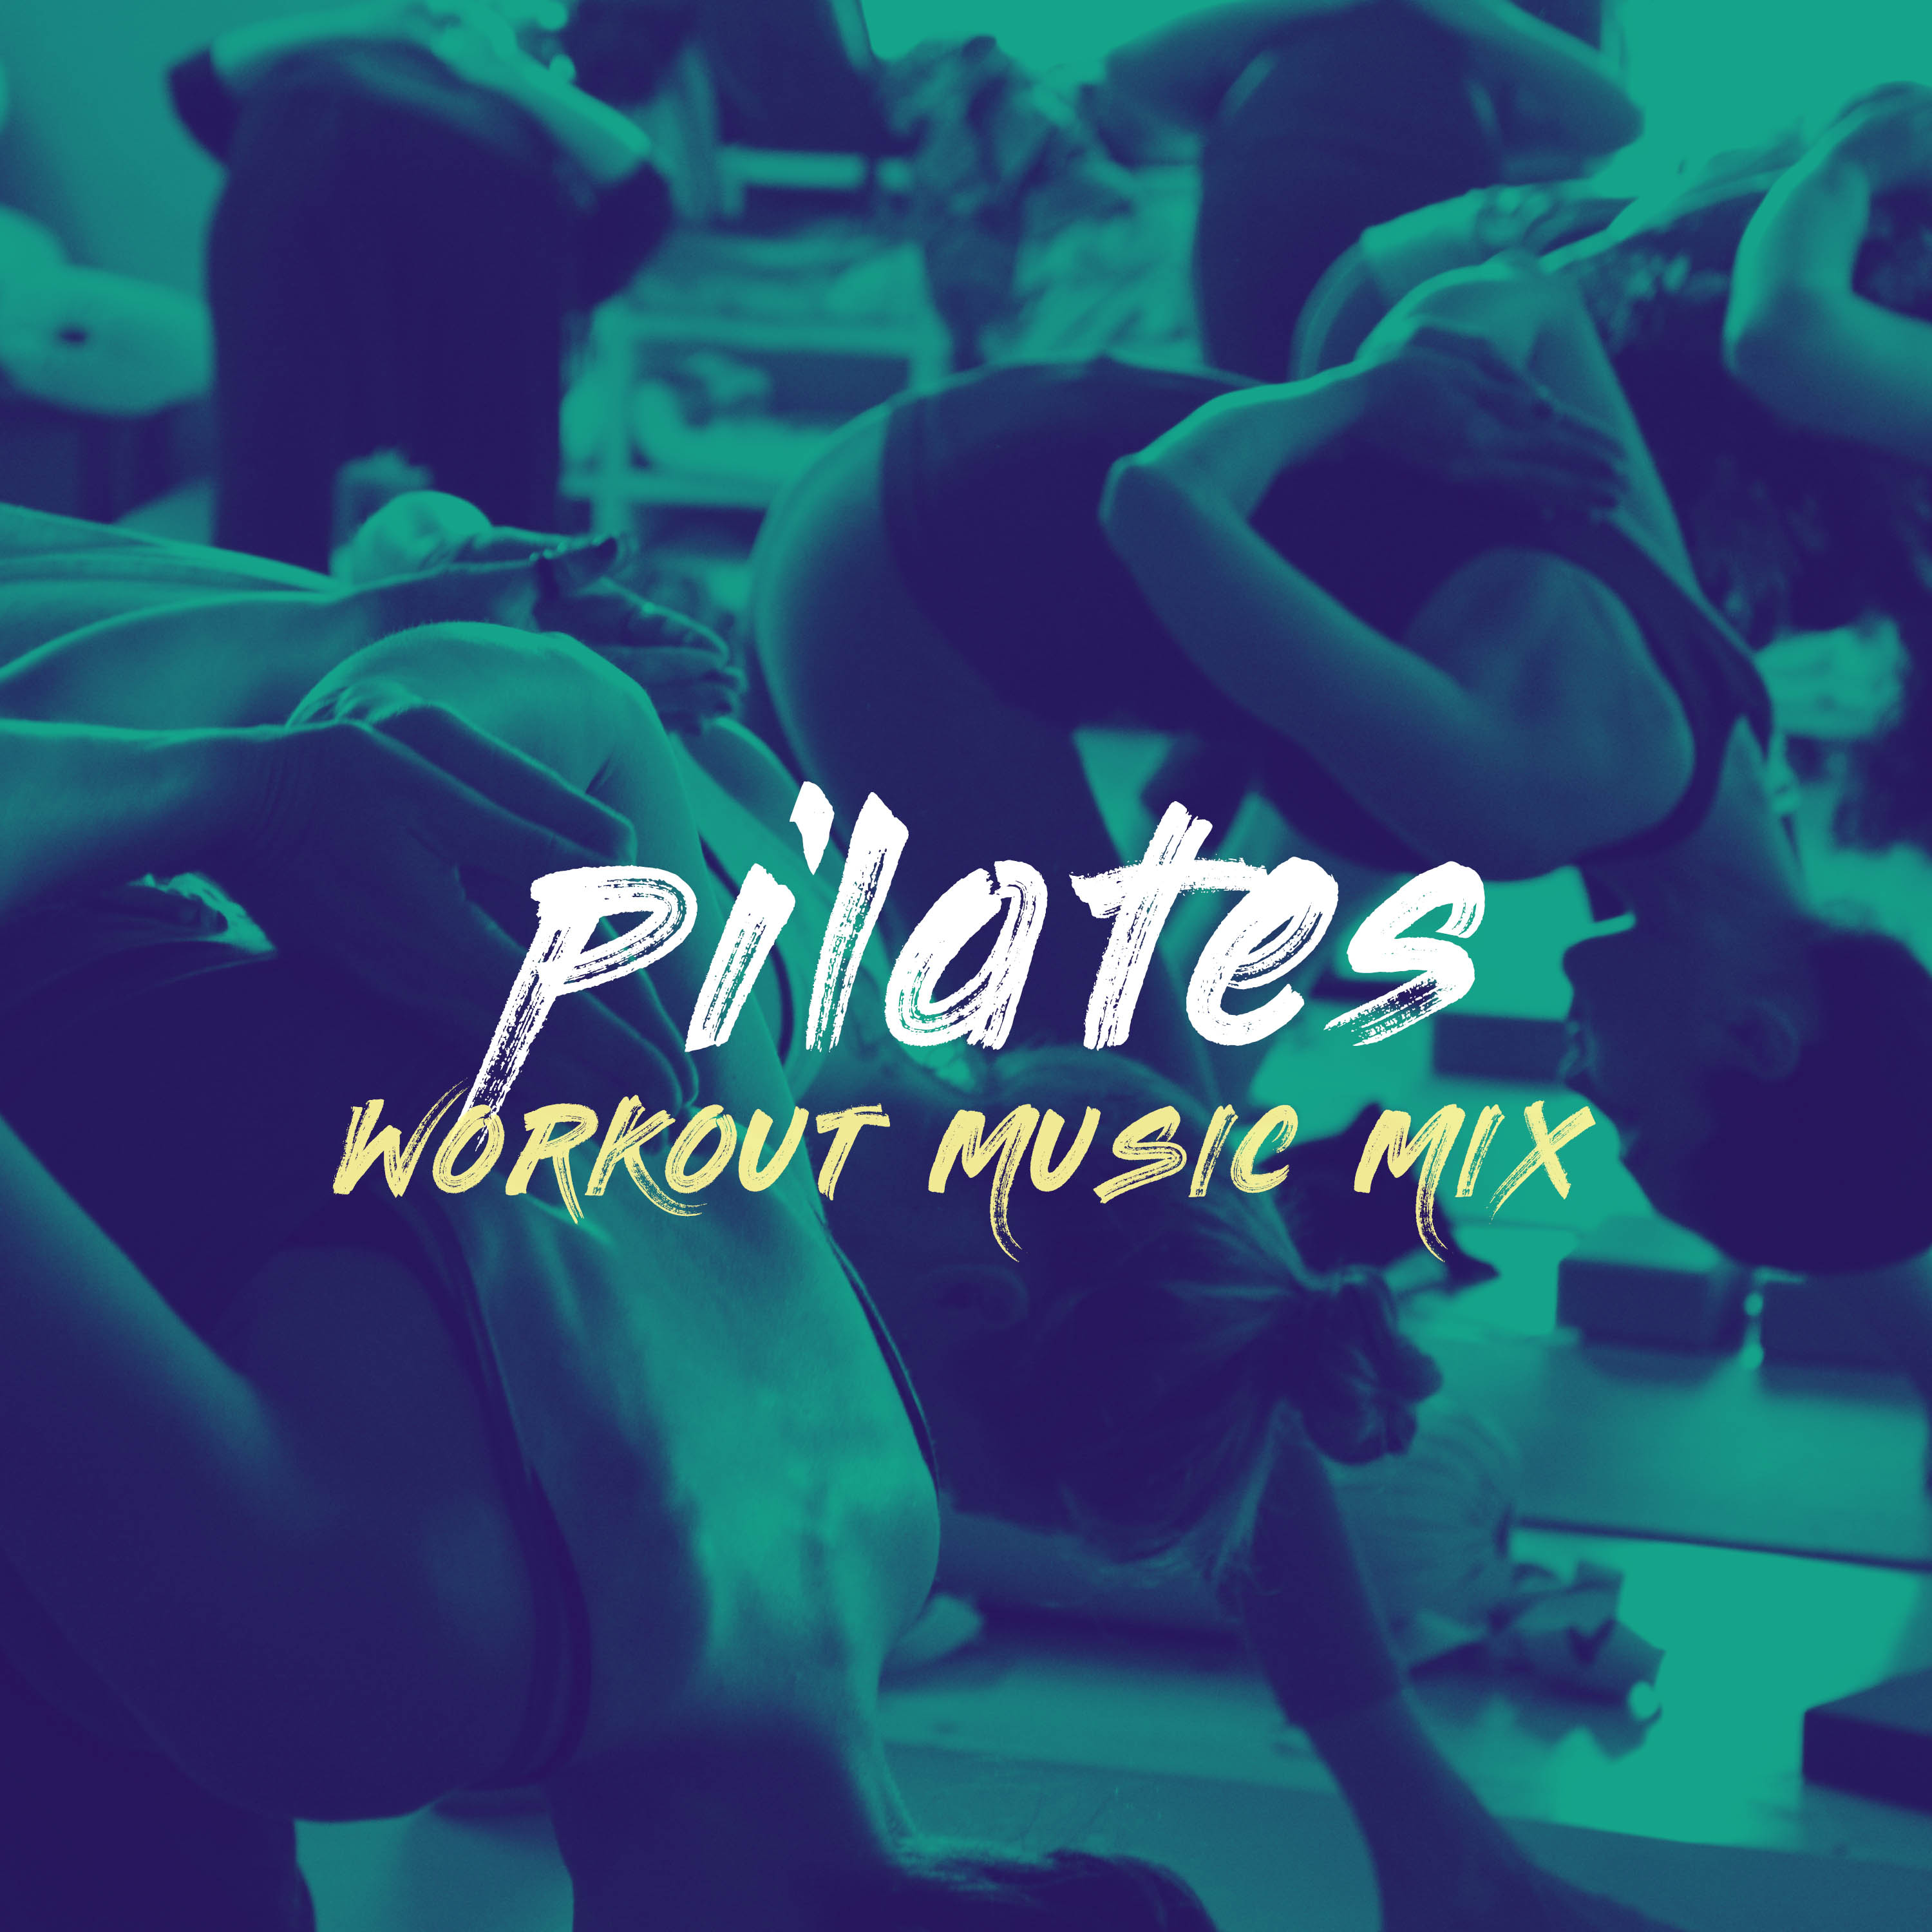 Pilates Workout Music Mix 2018 - Top 100 Hits, Multi BPM Workout Mix Perfect for Toning, Yoga, Pilates and Balance Workouts